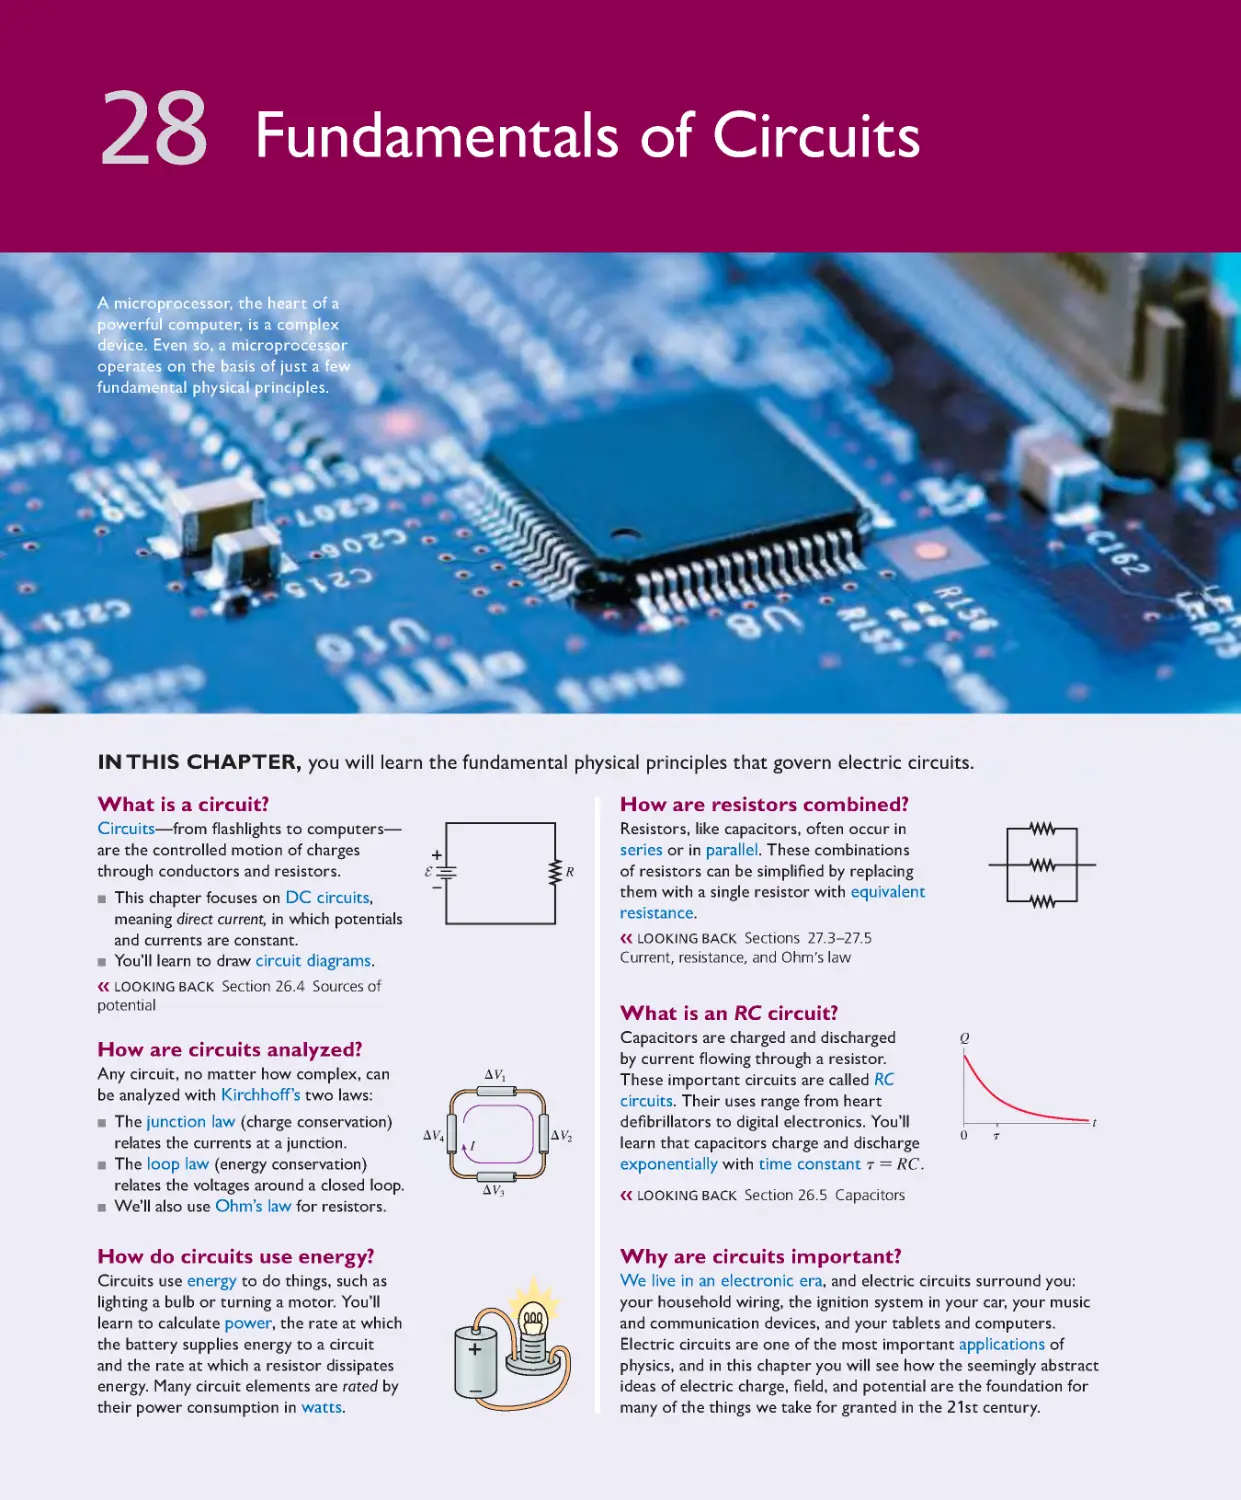 Chapter 28: Fundamentals of Circuits